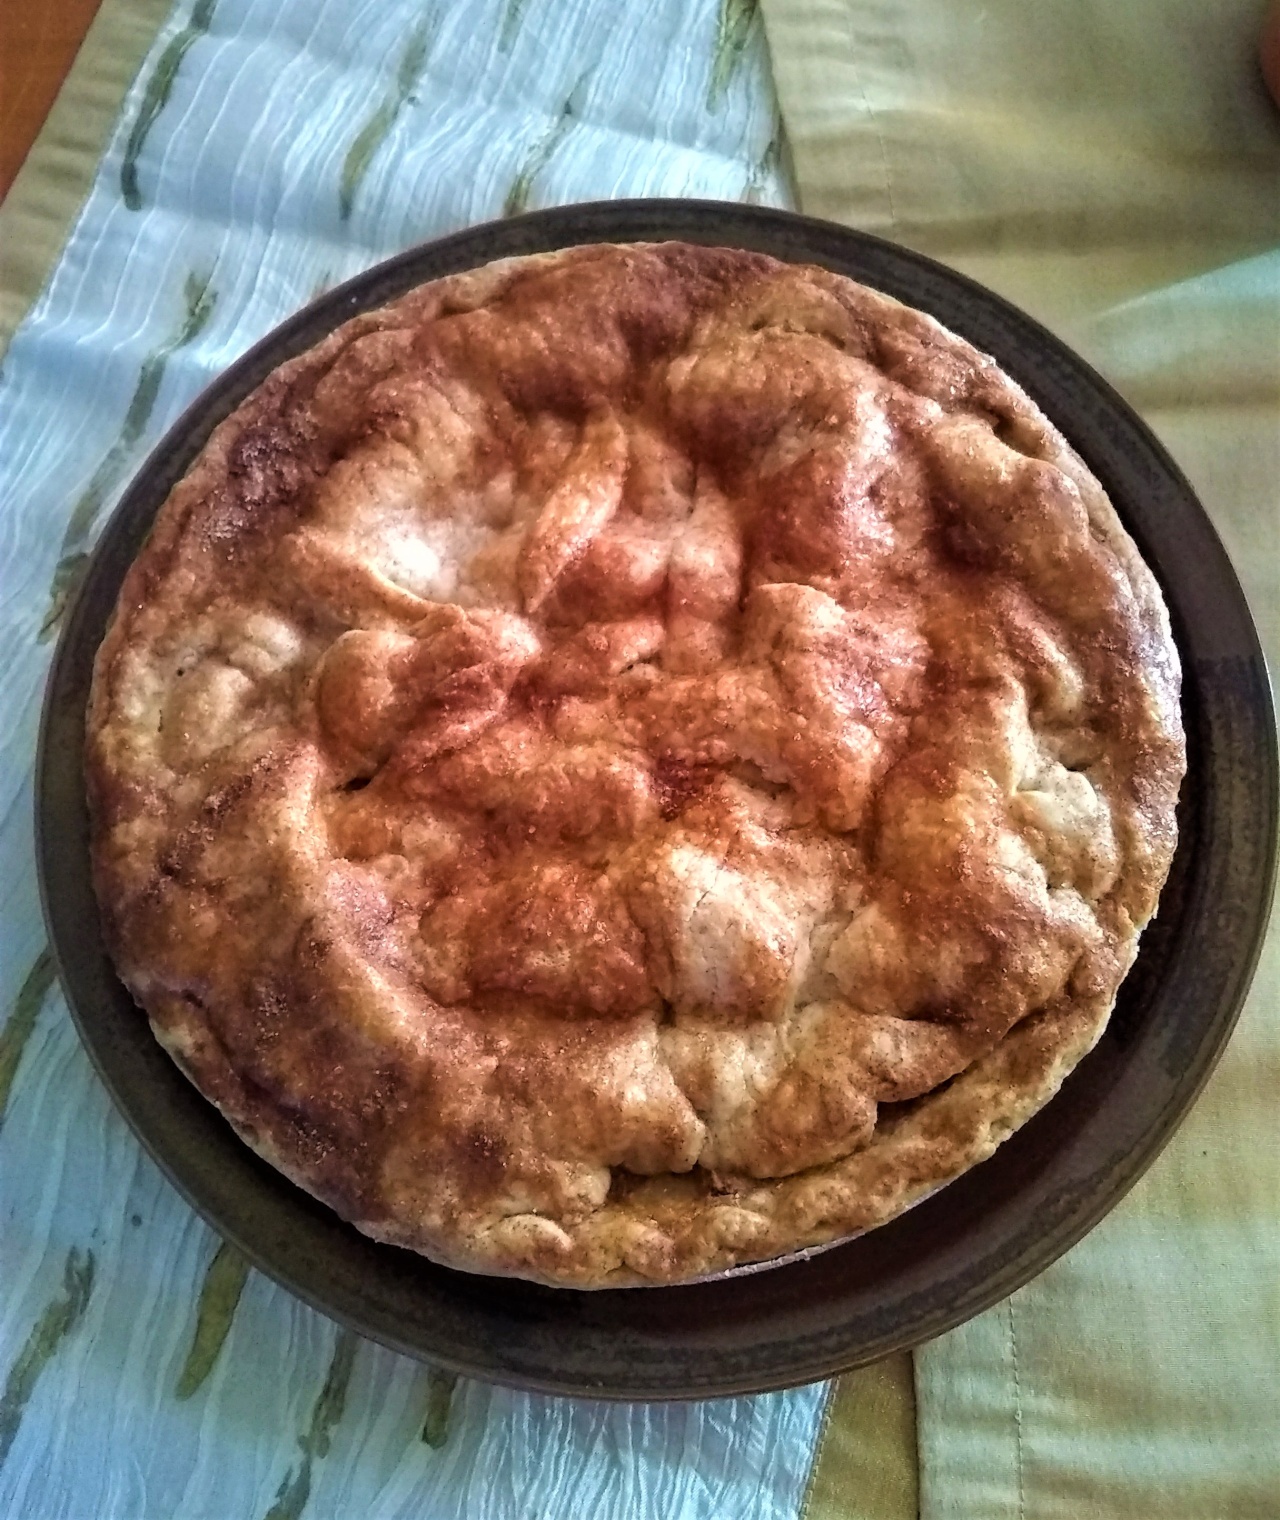 Thanksgiving apple pie alone pynck.jpg